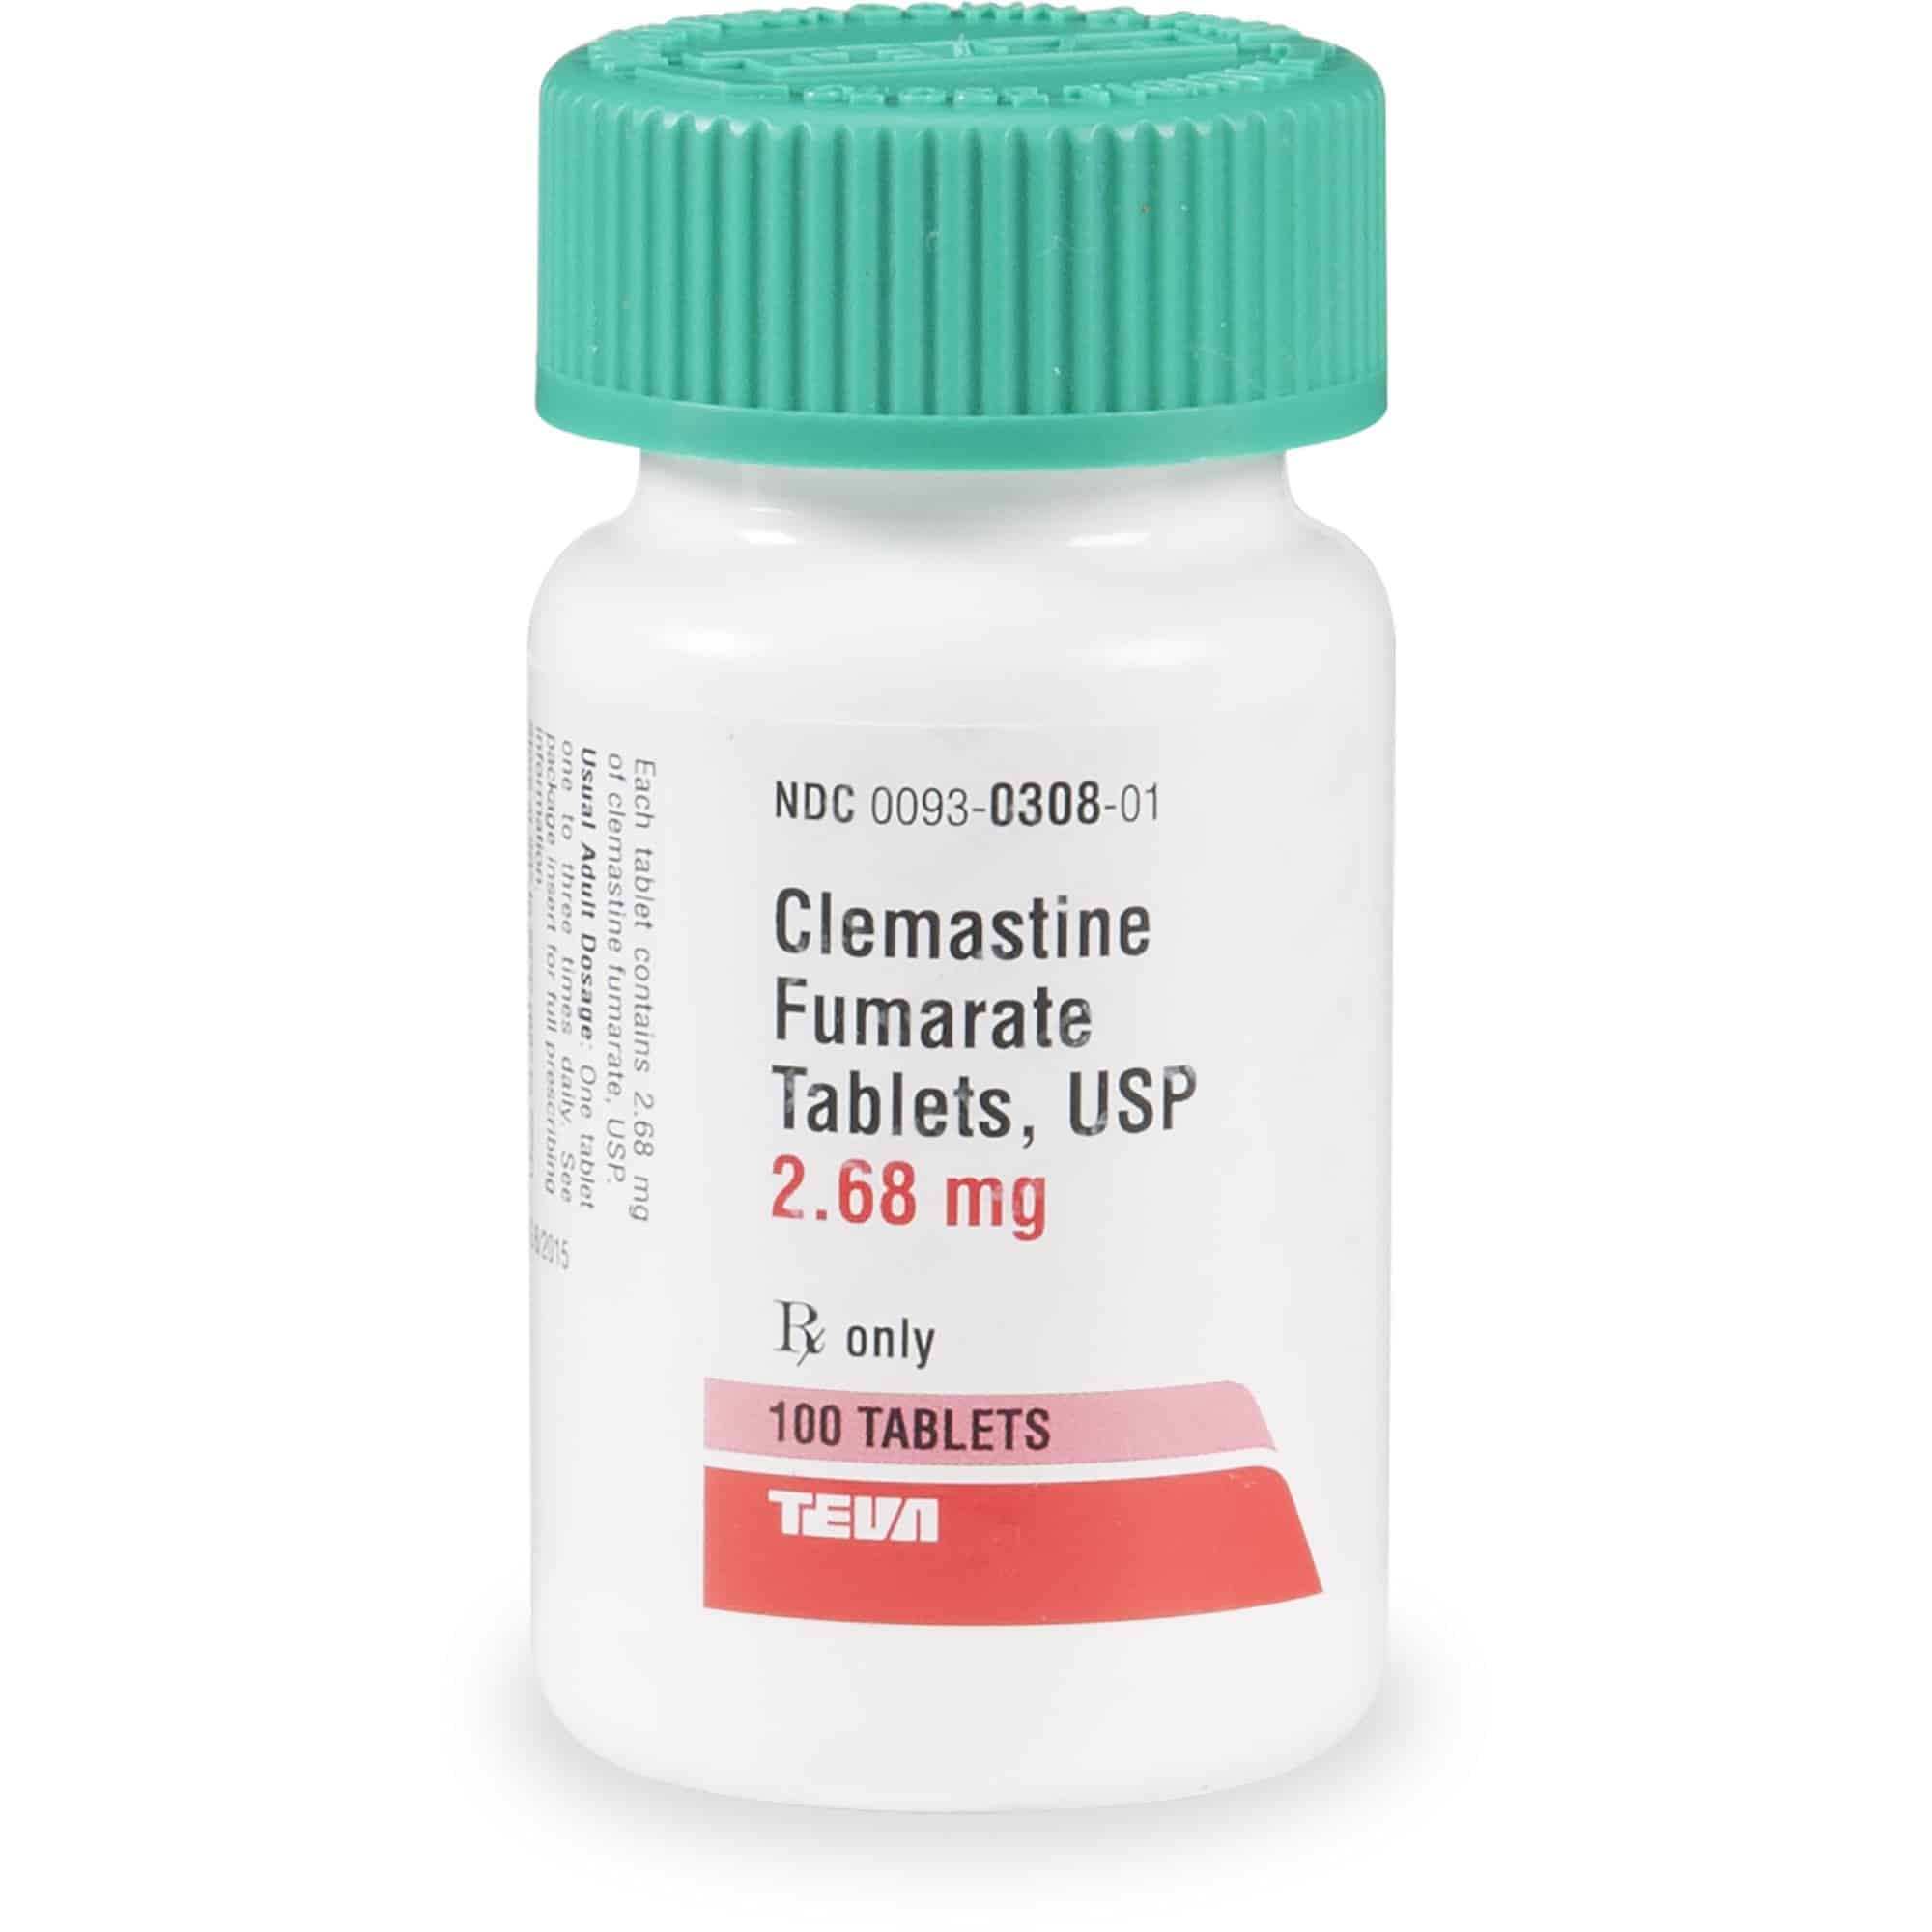 Doxycycline 100 mg Tablets